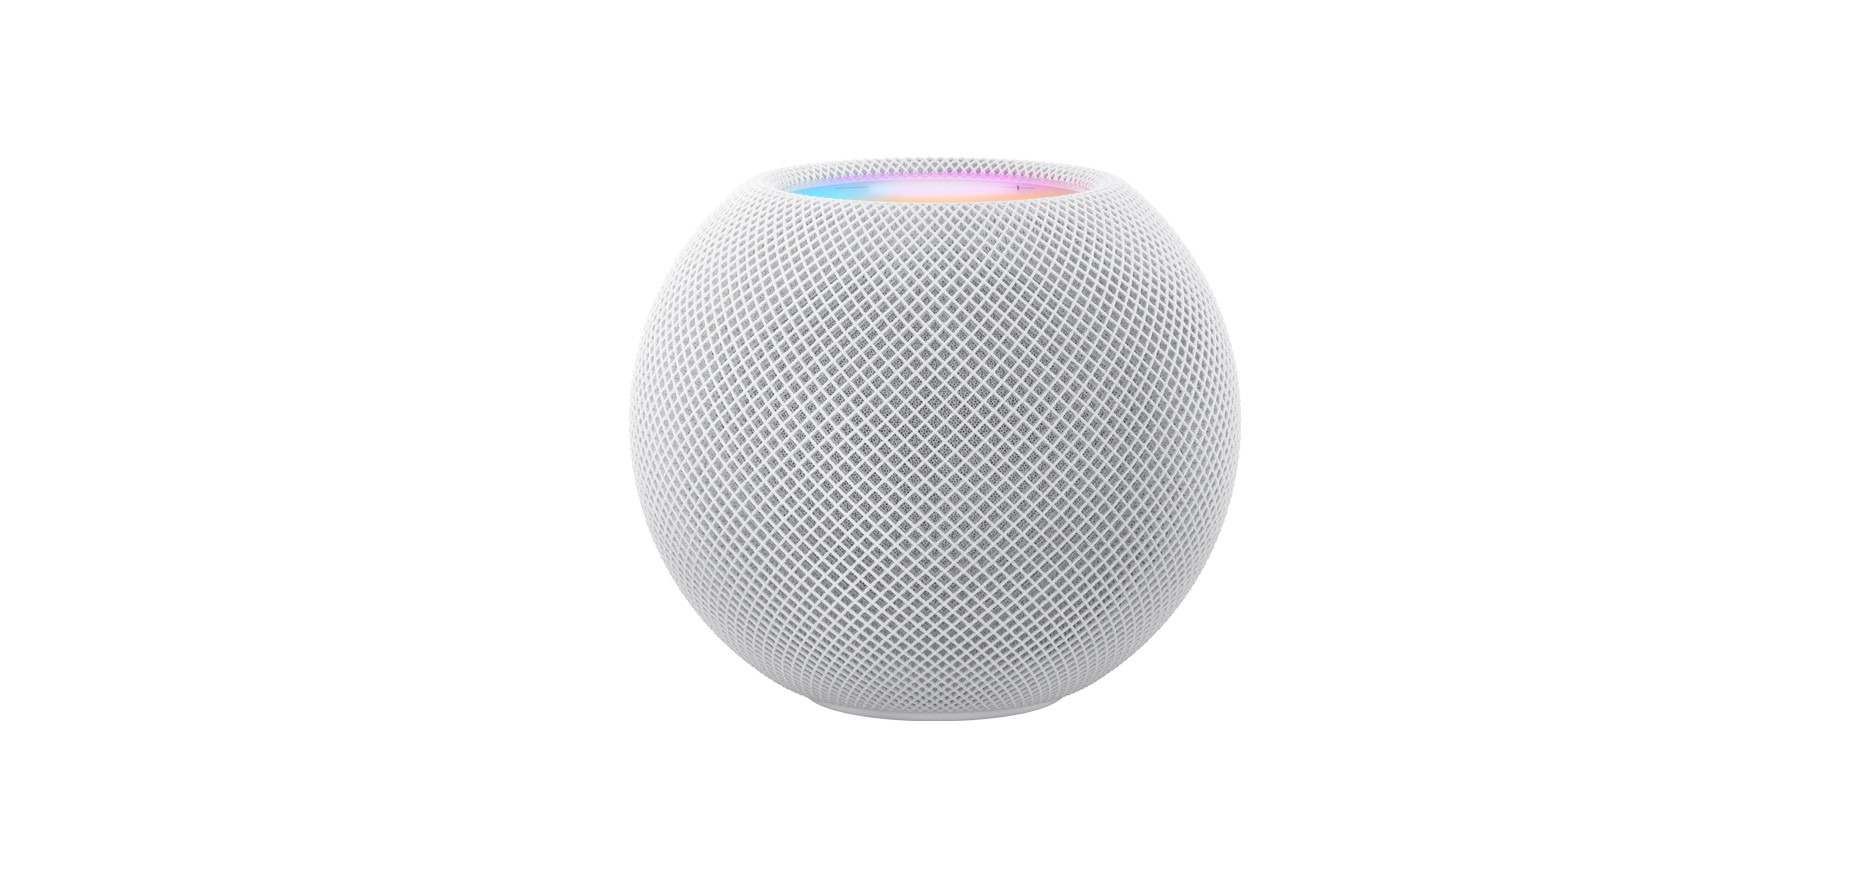 Apple MY5H2HN/A HomePod Mini with Siri Assistant Smart Speaker, White